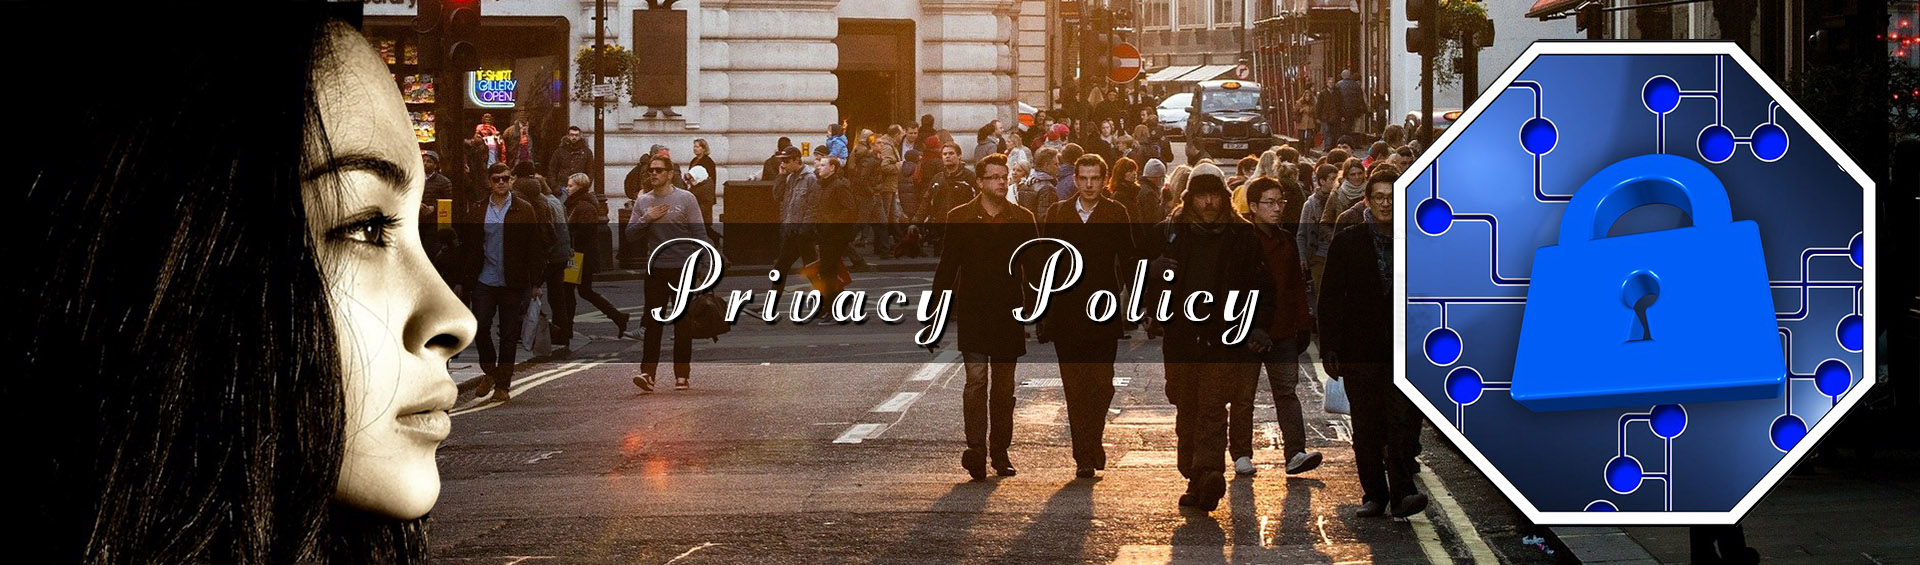 Warmzone privacy policy banner